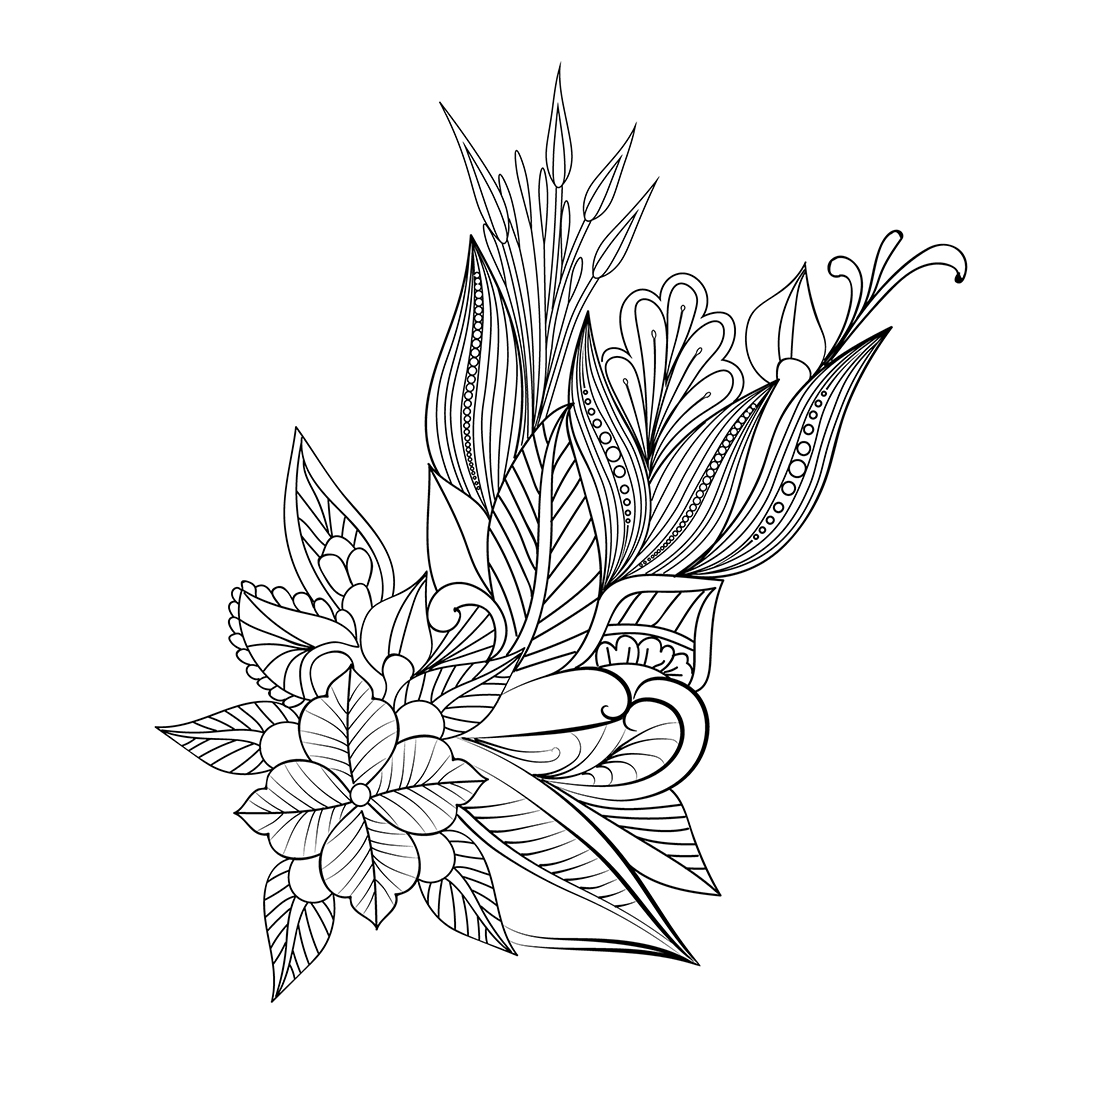 Doodle flower art, doodle flower art drawing, doodle flower drawing, flower drawing doodle art zentangle art, doodle flower coloring pages cover image.